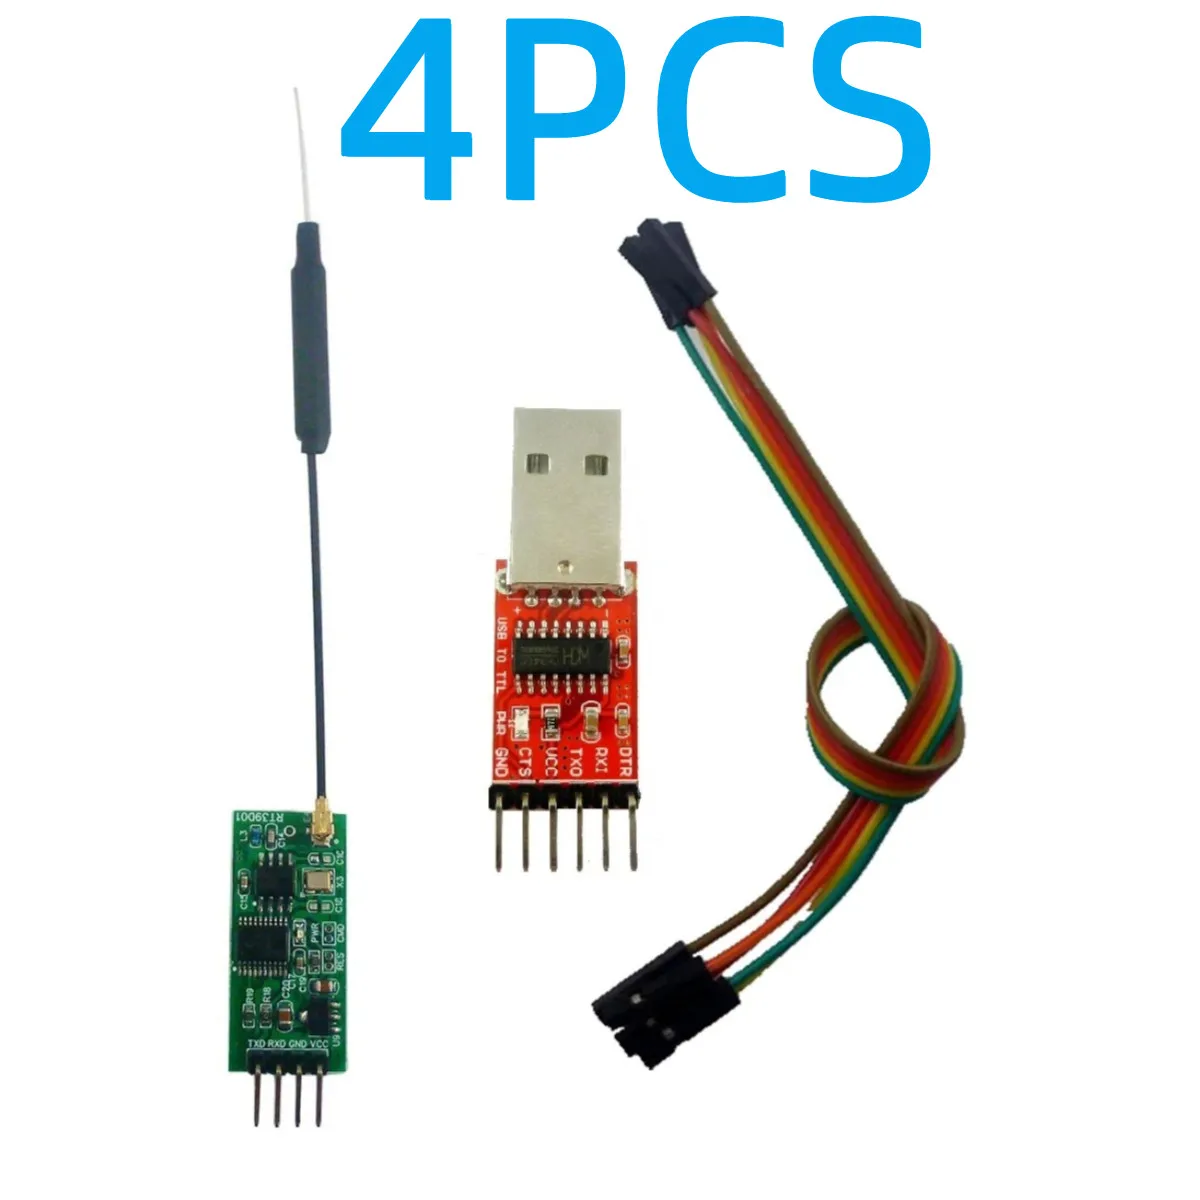 

4PCS 2.4G TTL Wireless Transceiver Module for Arduino Raspberry pi UNO MEGA2560 DUE